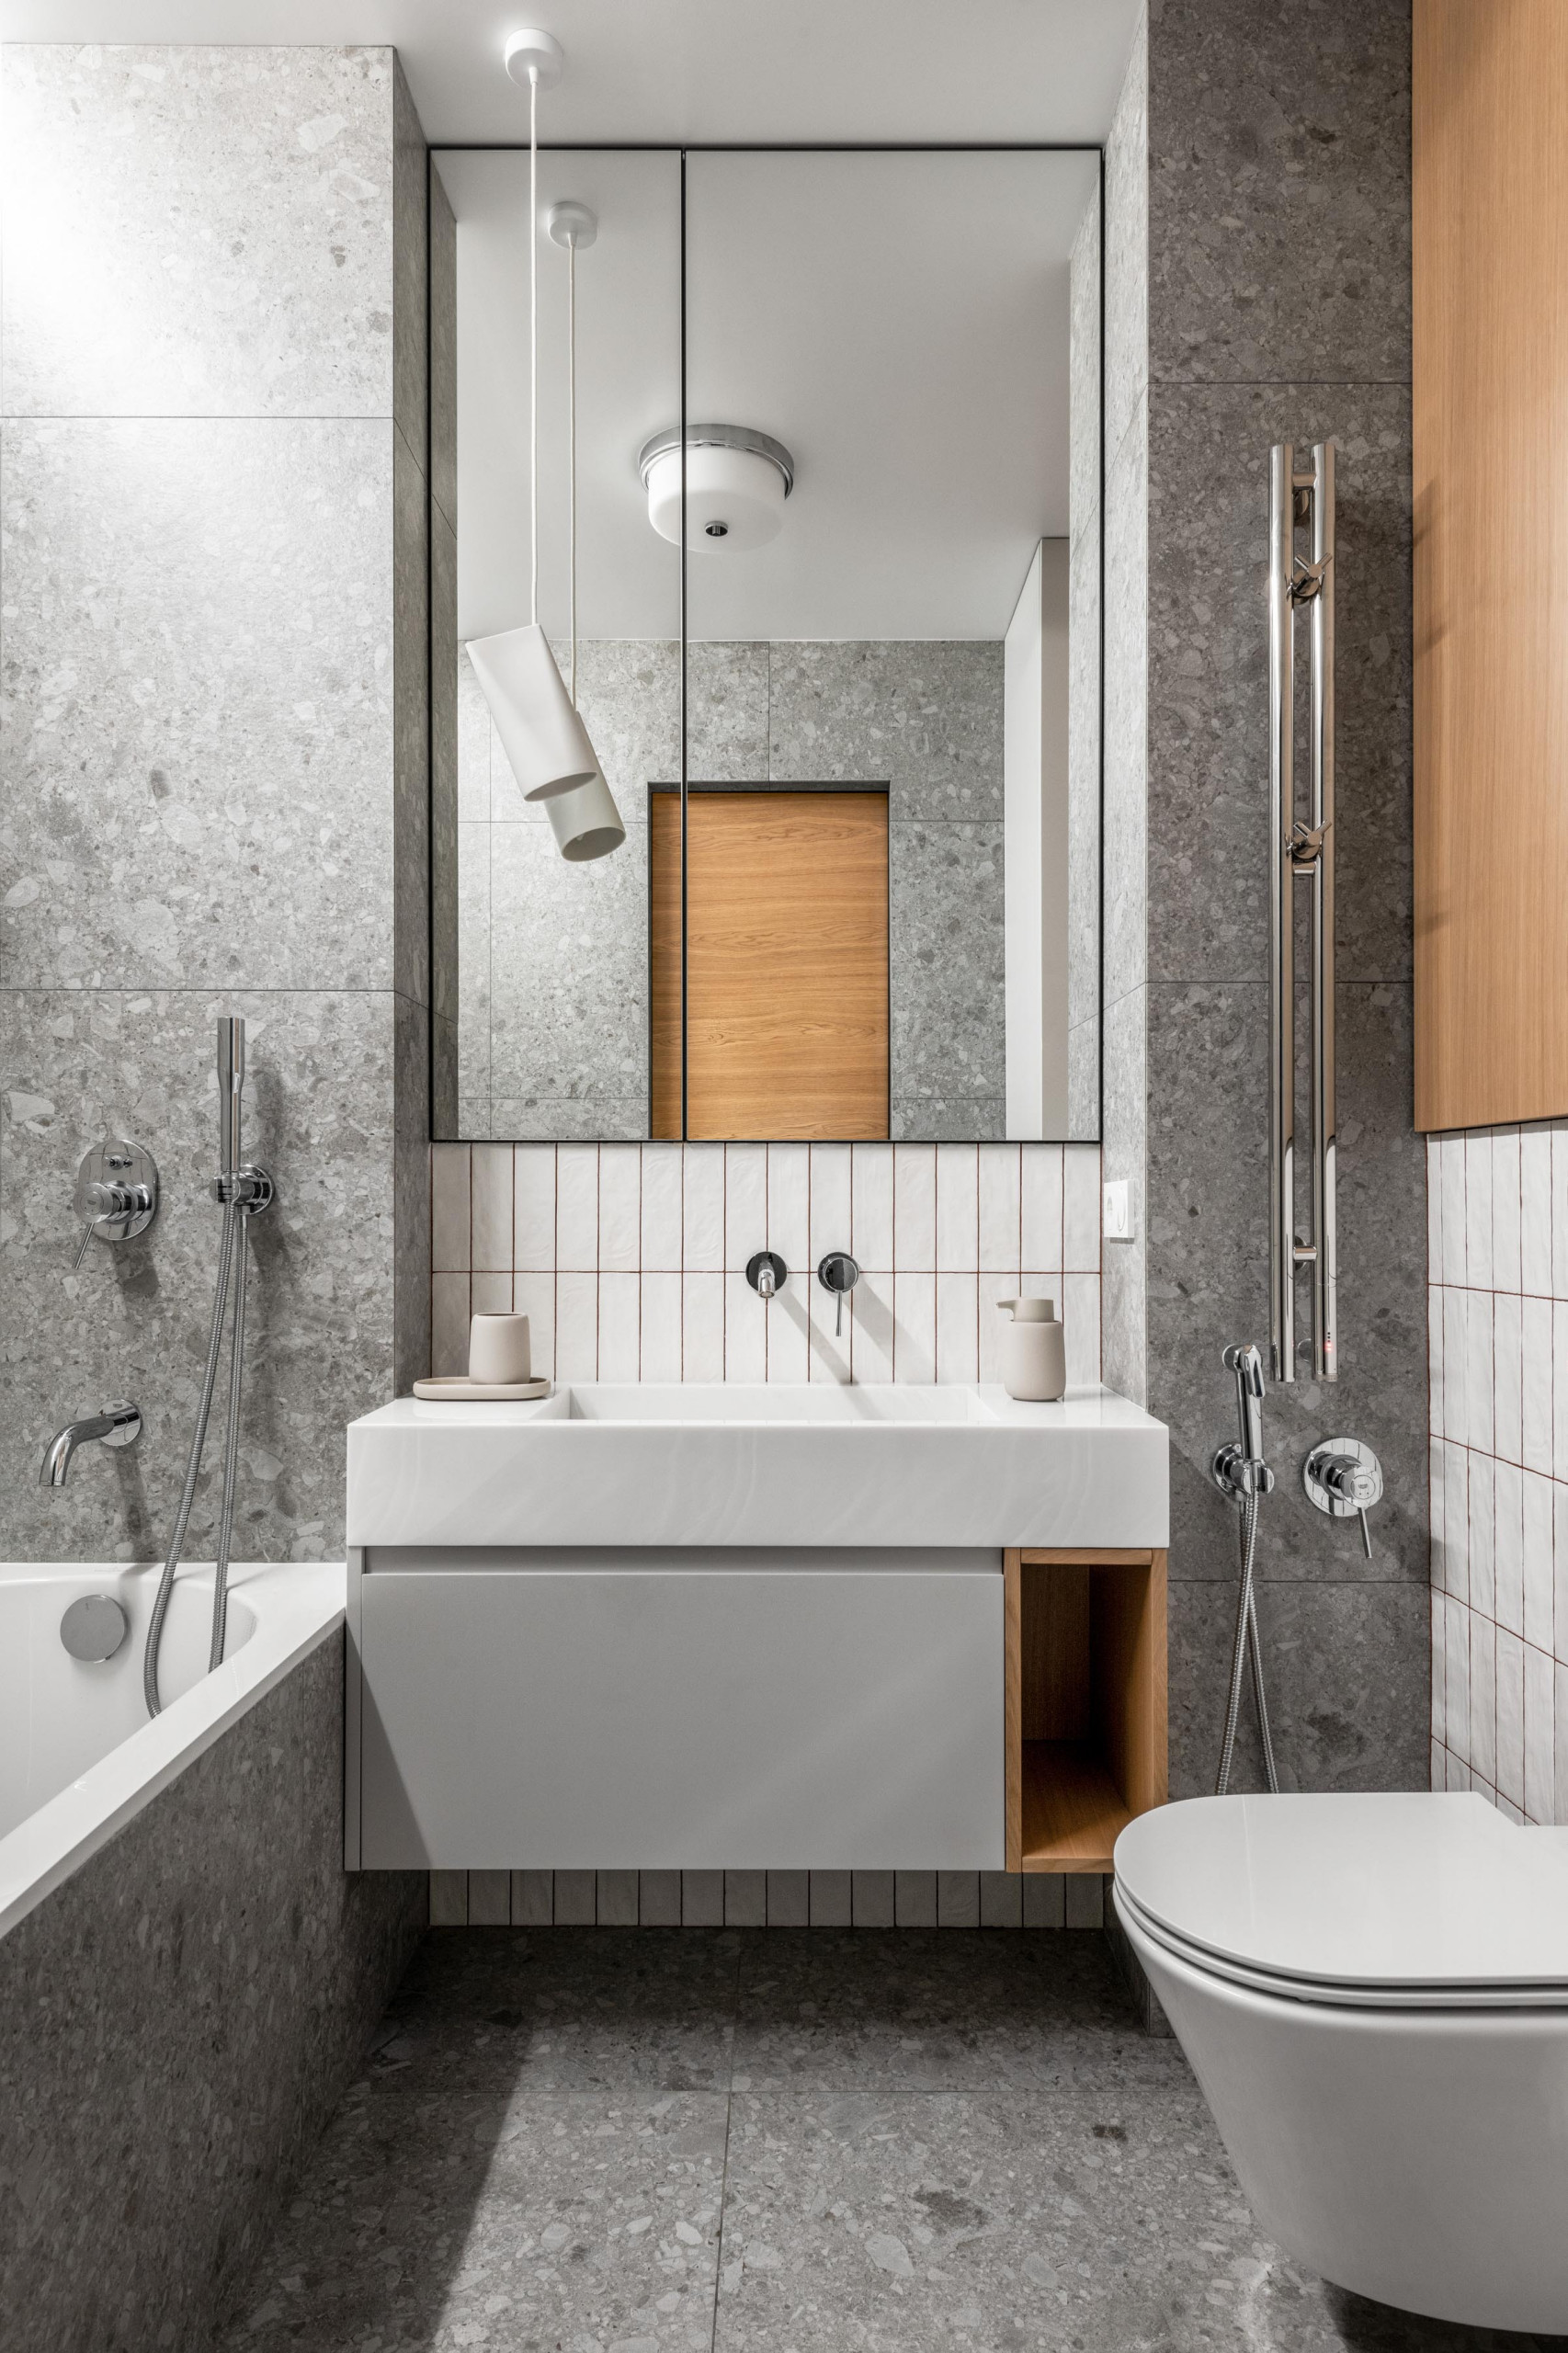 Ванная комната с туалетом размеры дизайн проект (39 фото)